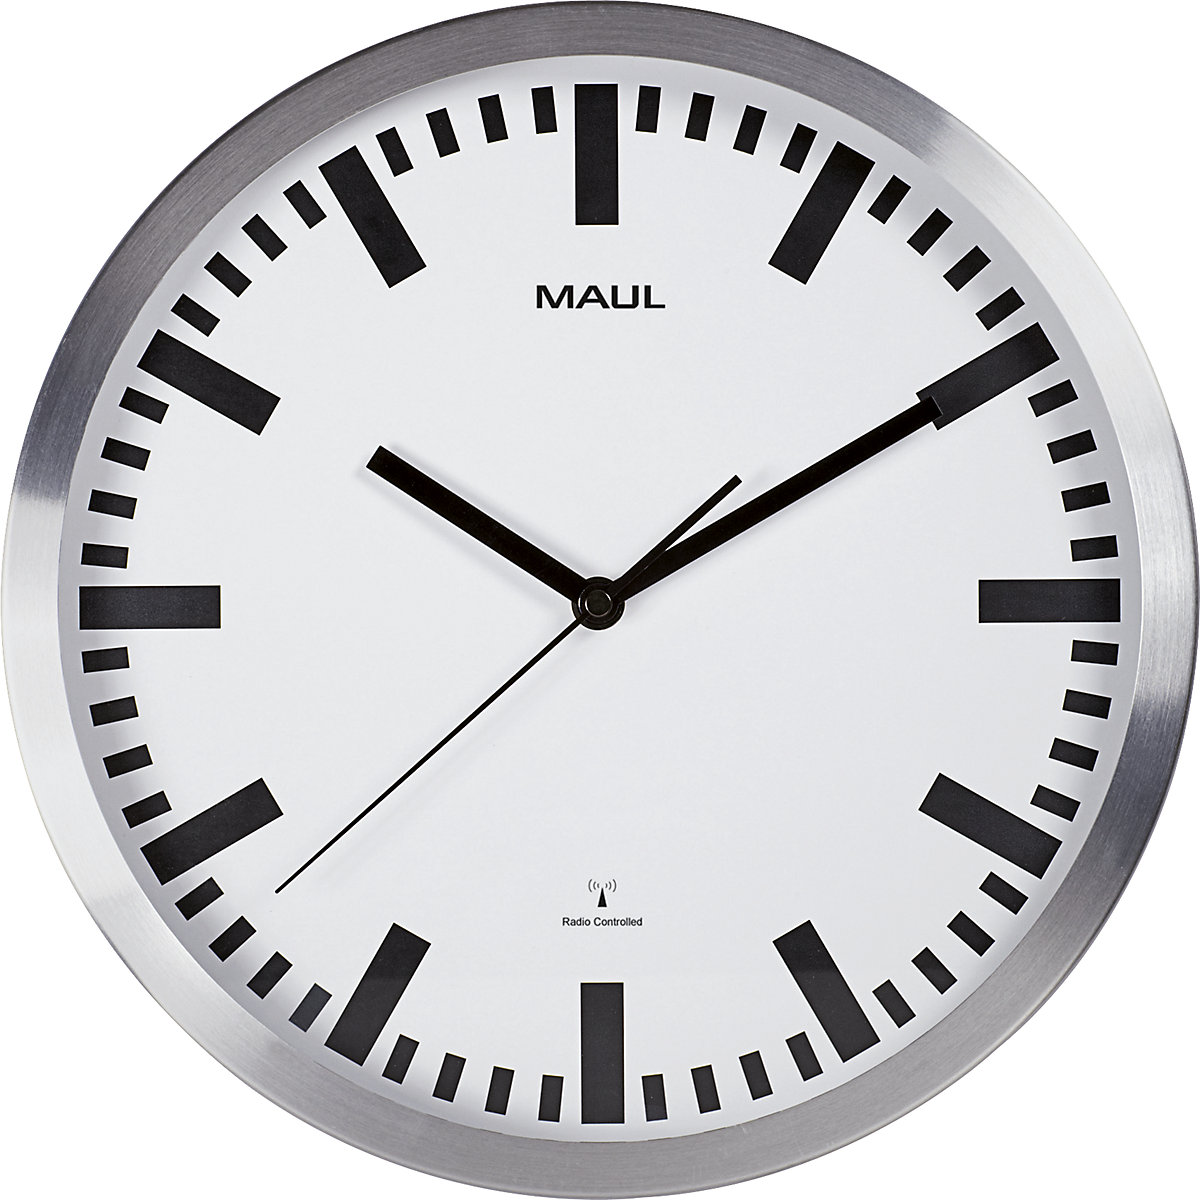 MAULpilot wall clock – MAUL